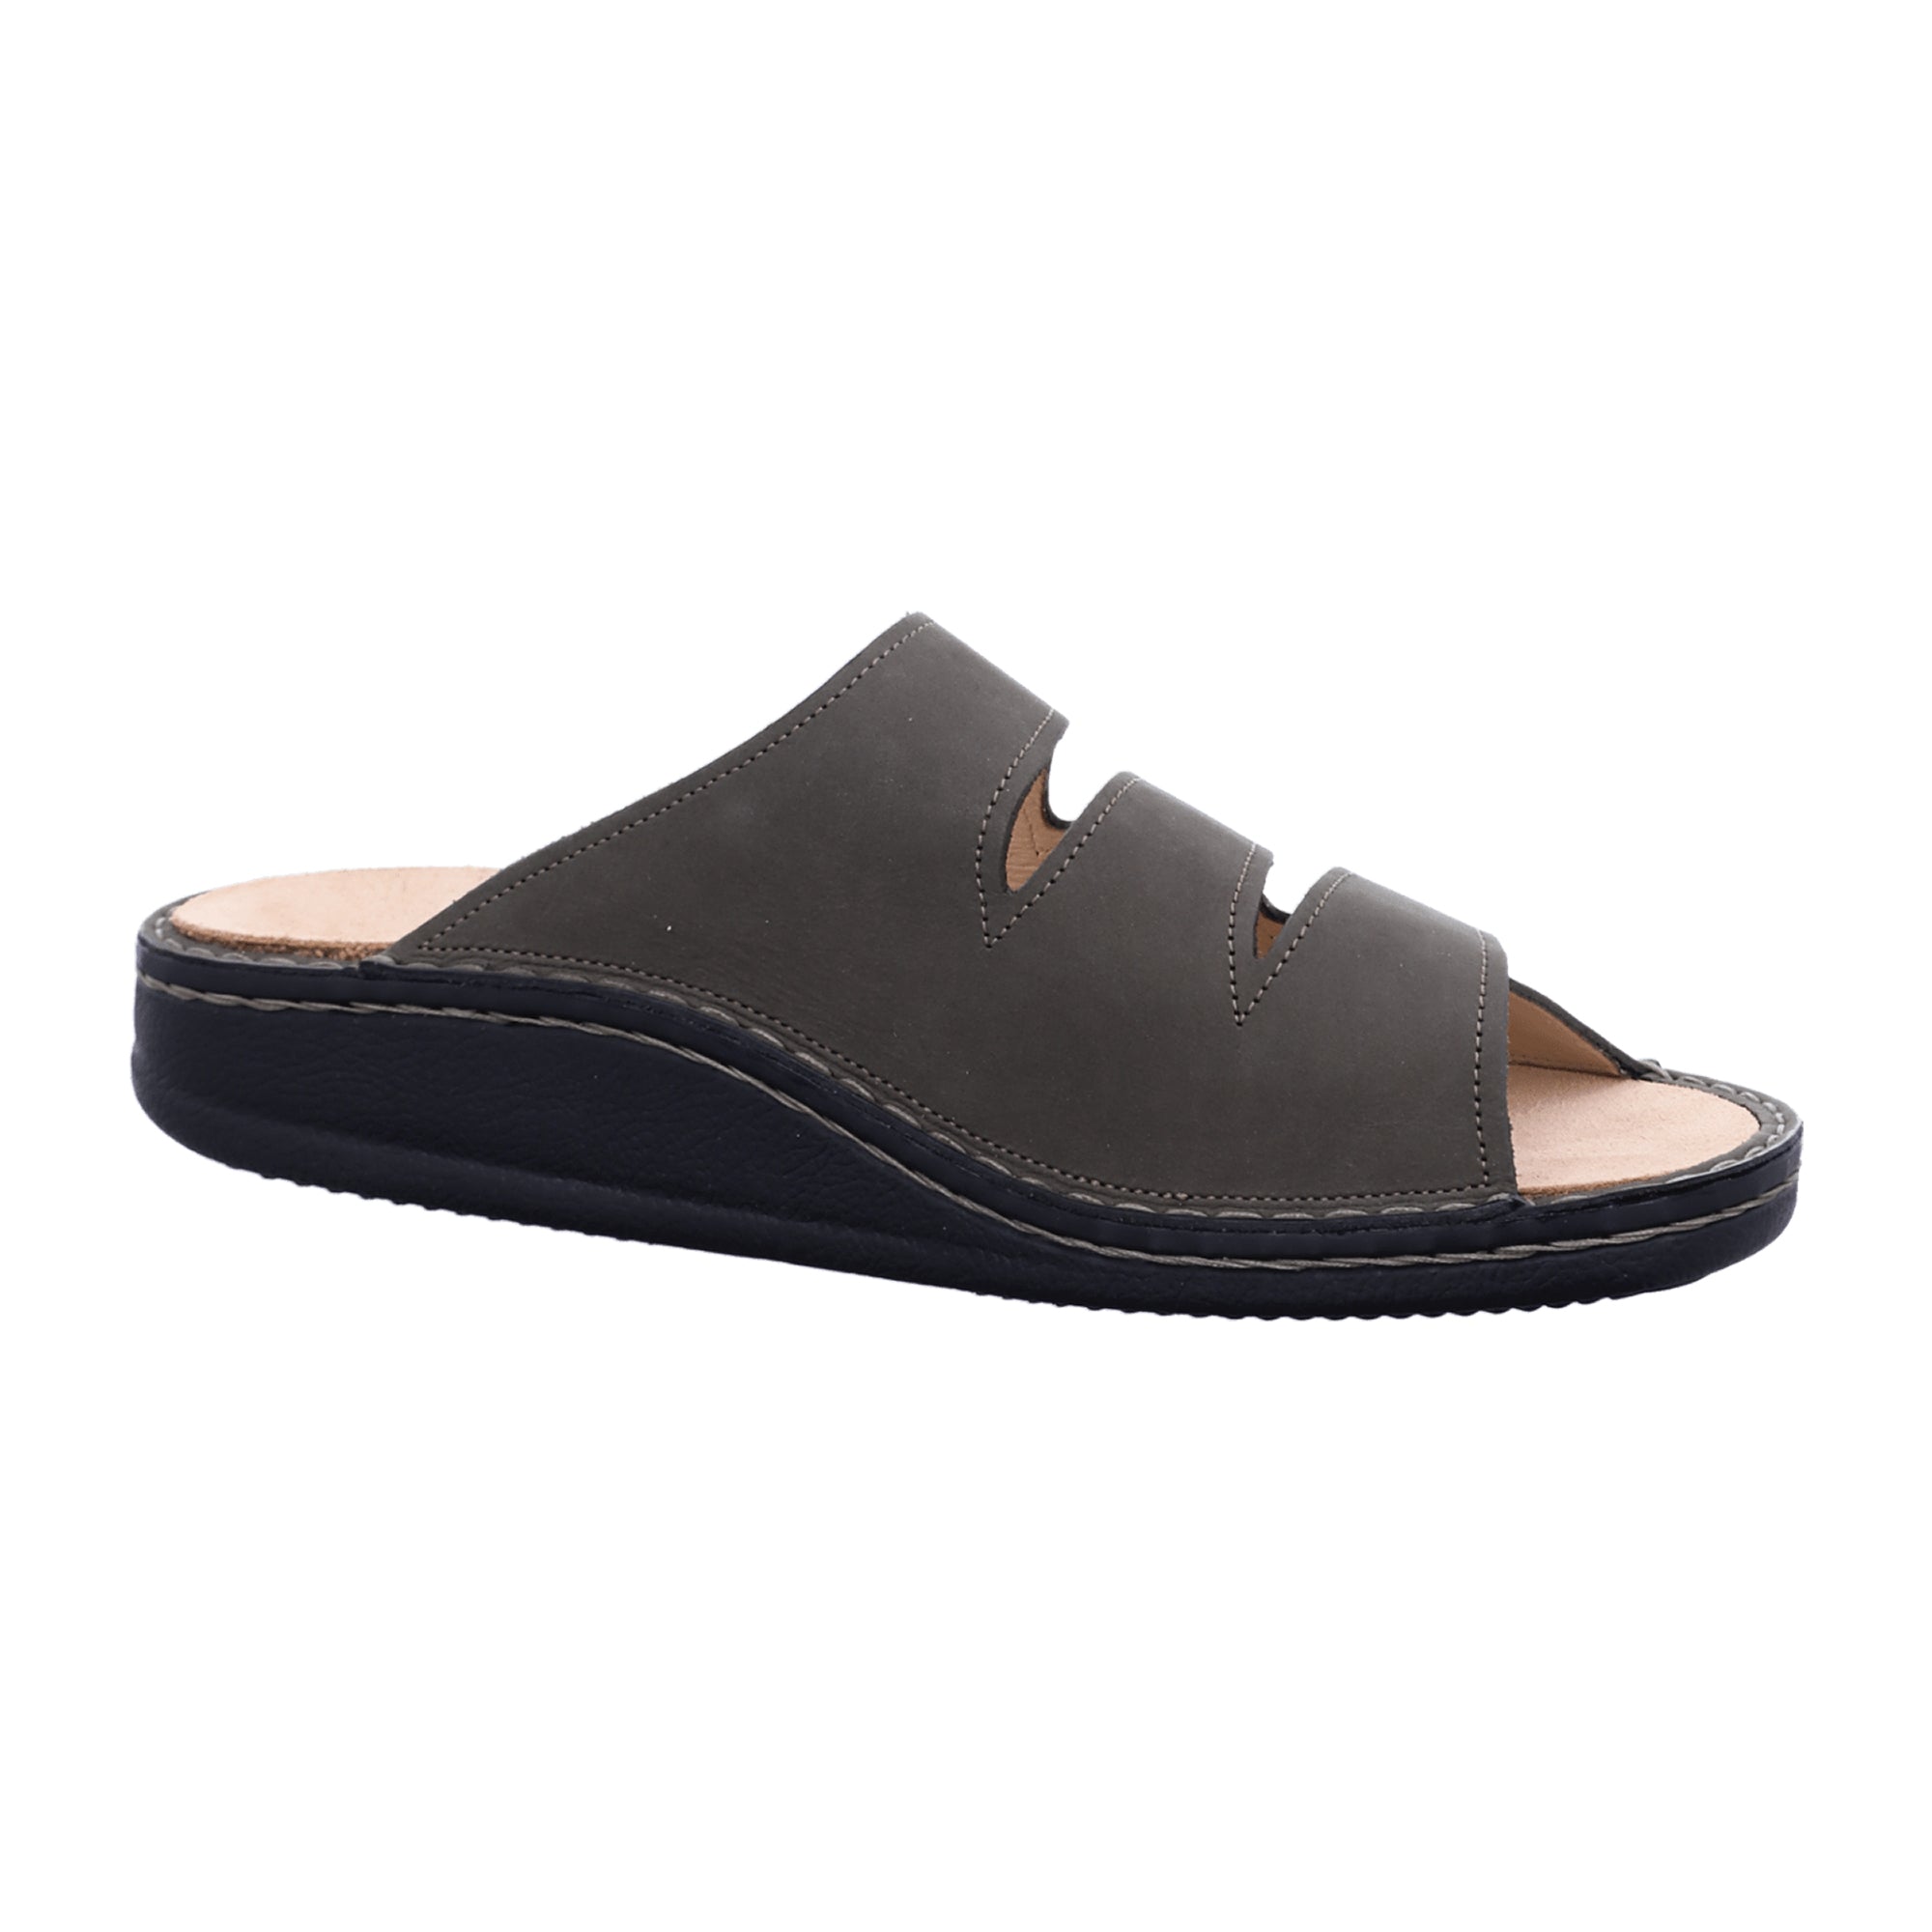 Finn Comfort Korfu Men's Comfortable Sandals - Stylish Grey